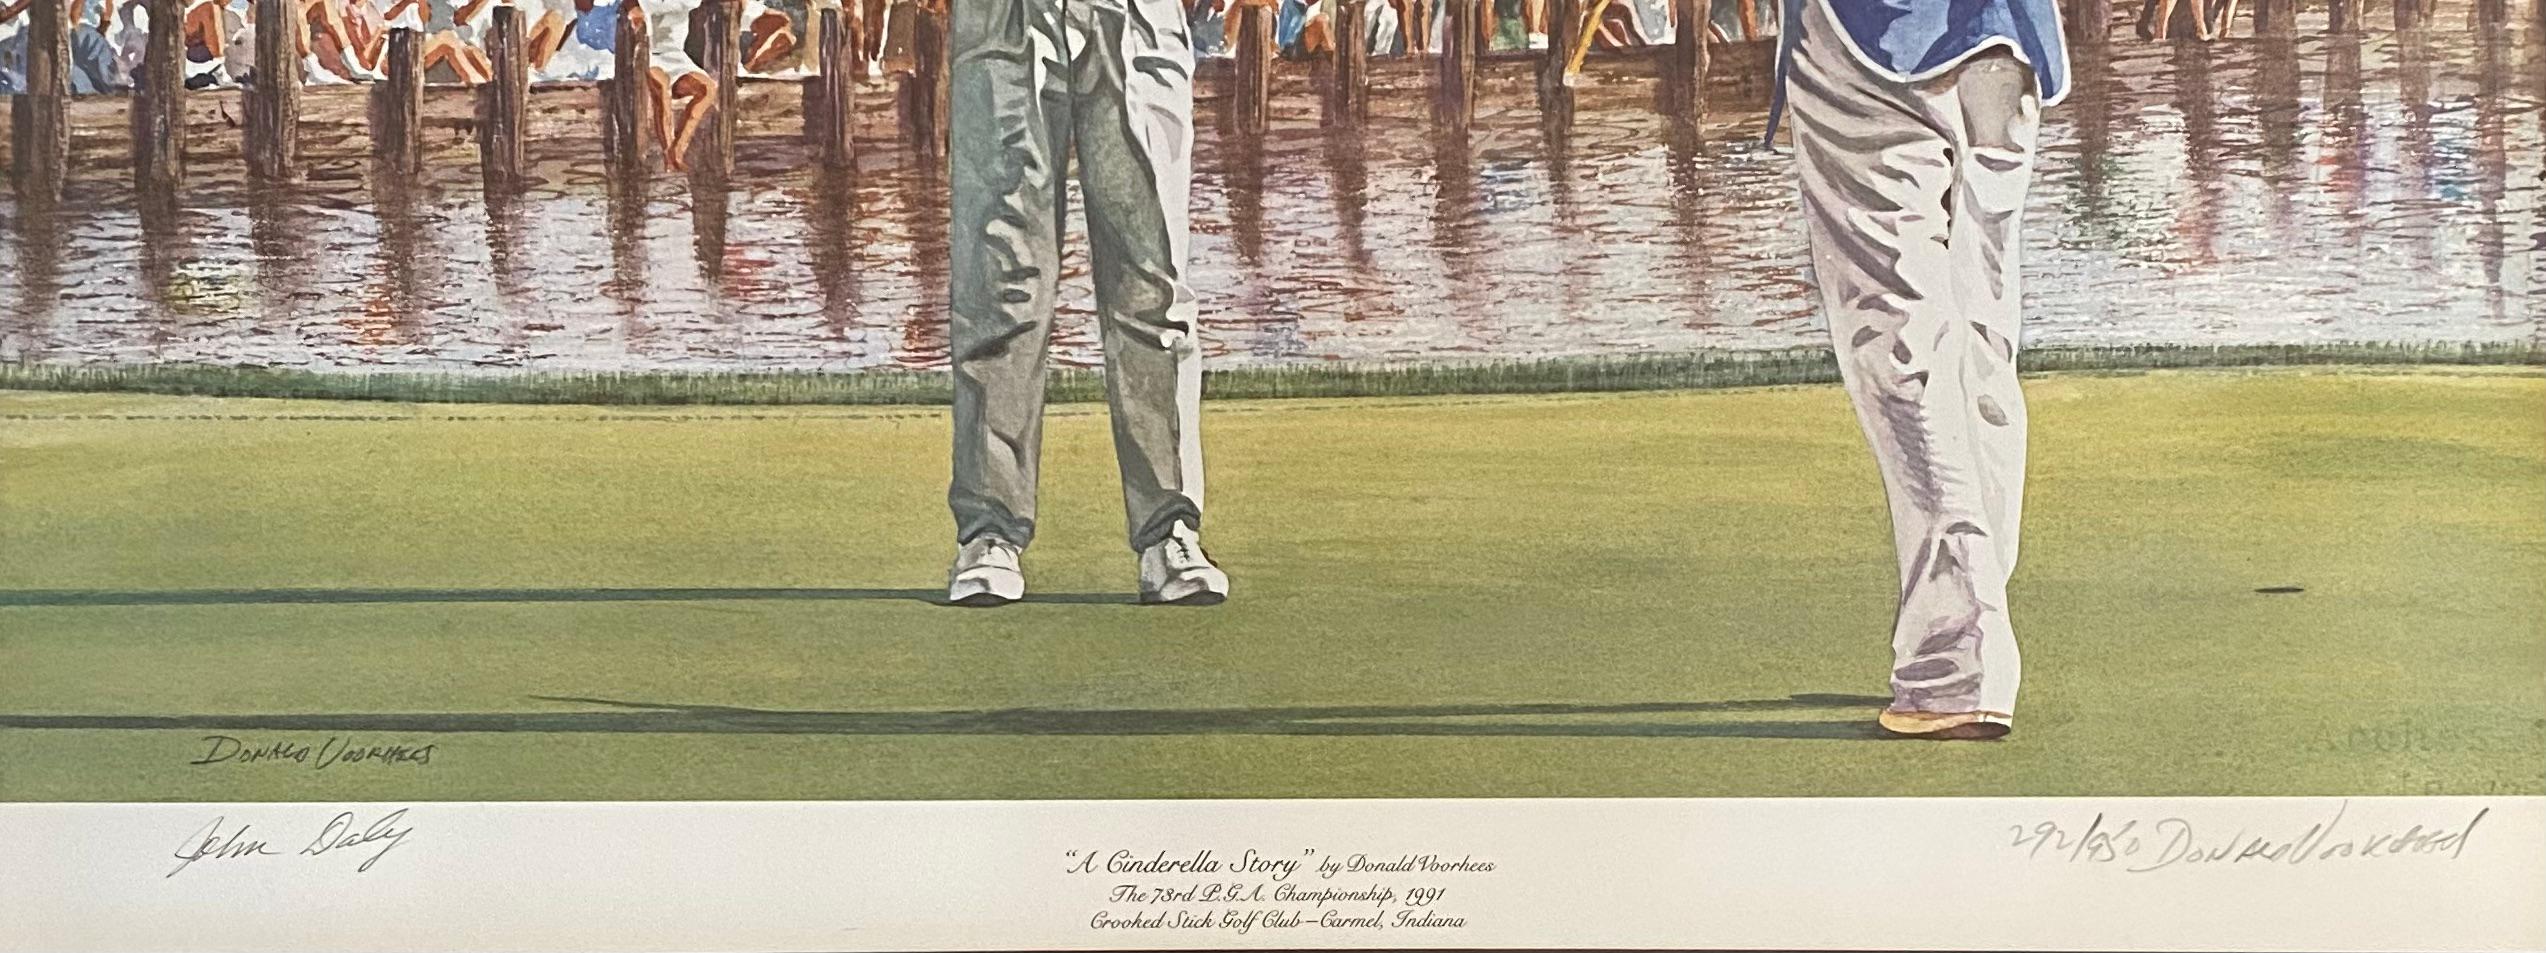 Modern PGA Golf Tournament Autographed Lithograph, Certified Sports Memorabilia For Sale